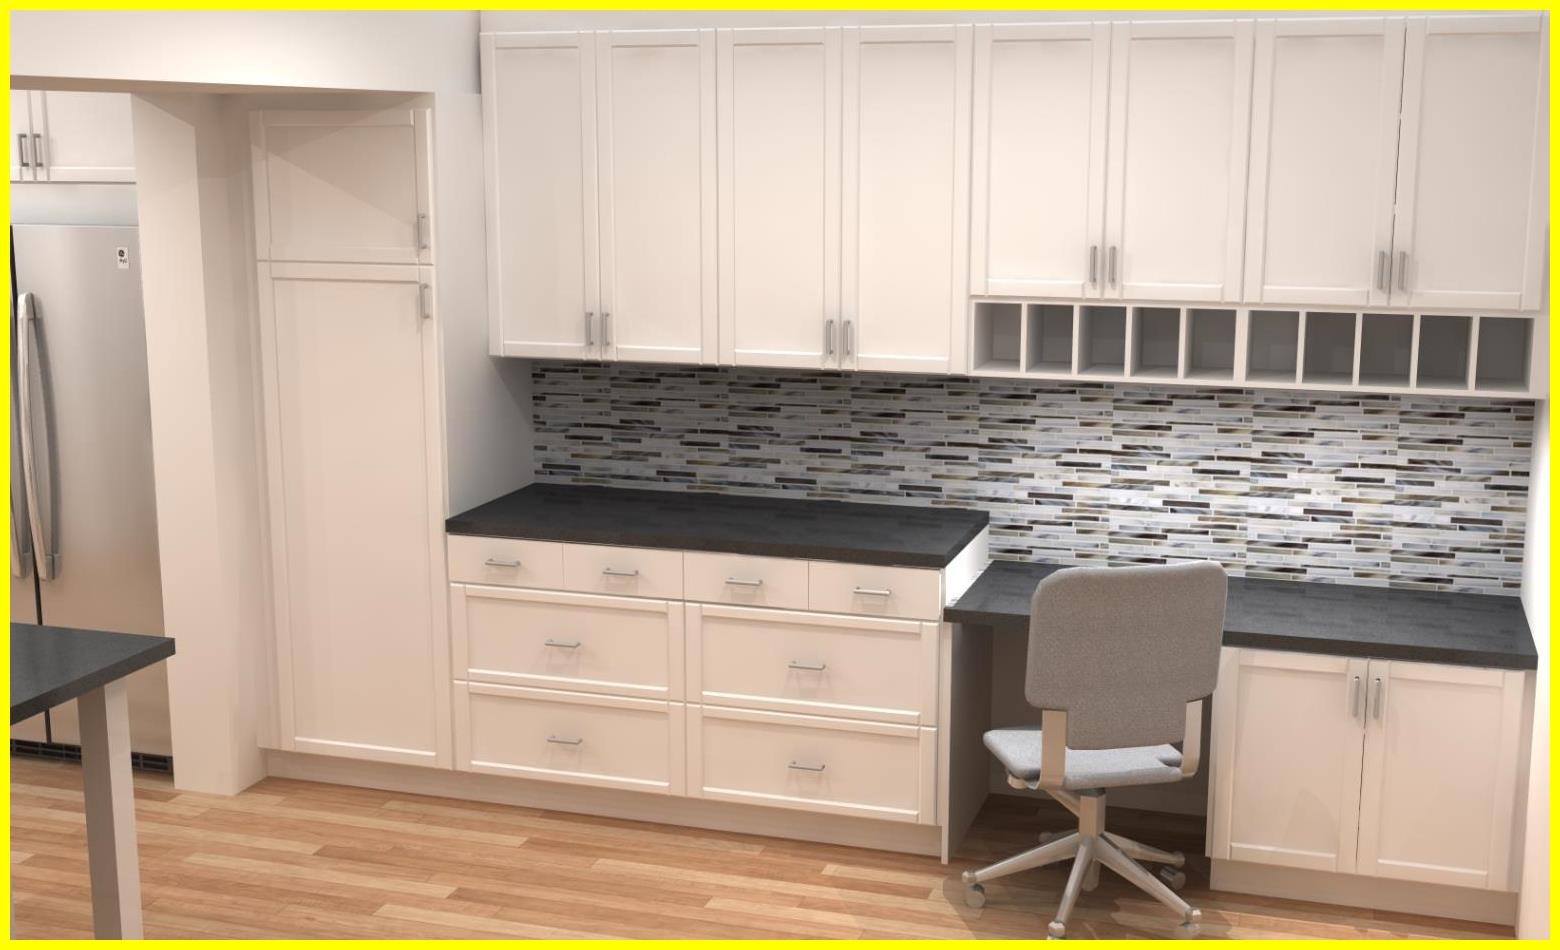 12 Kitchen Desk Cabinets Small kitchen remodel with IKEA cabinets Kitchen,Desk,Cabinets